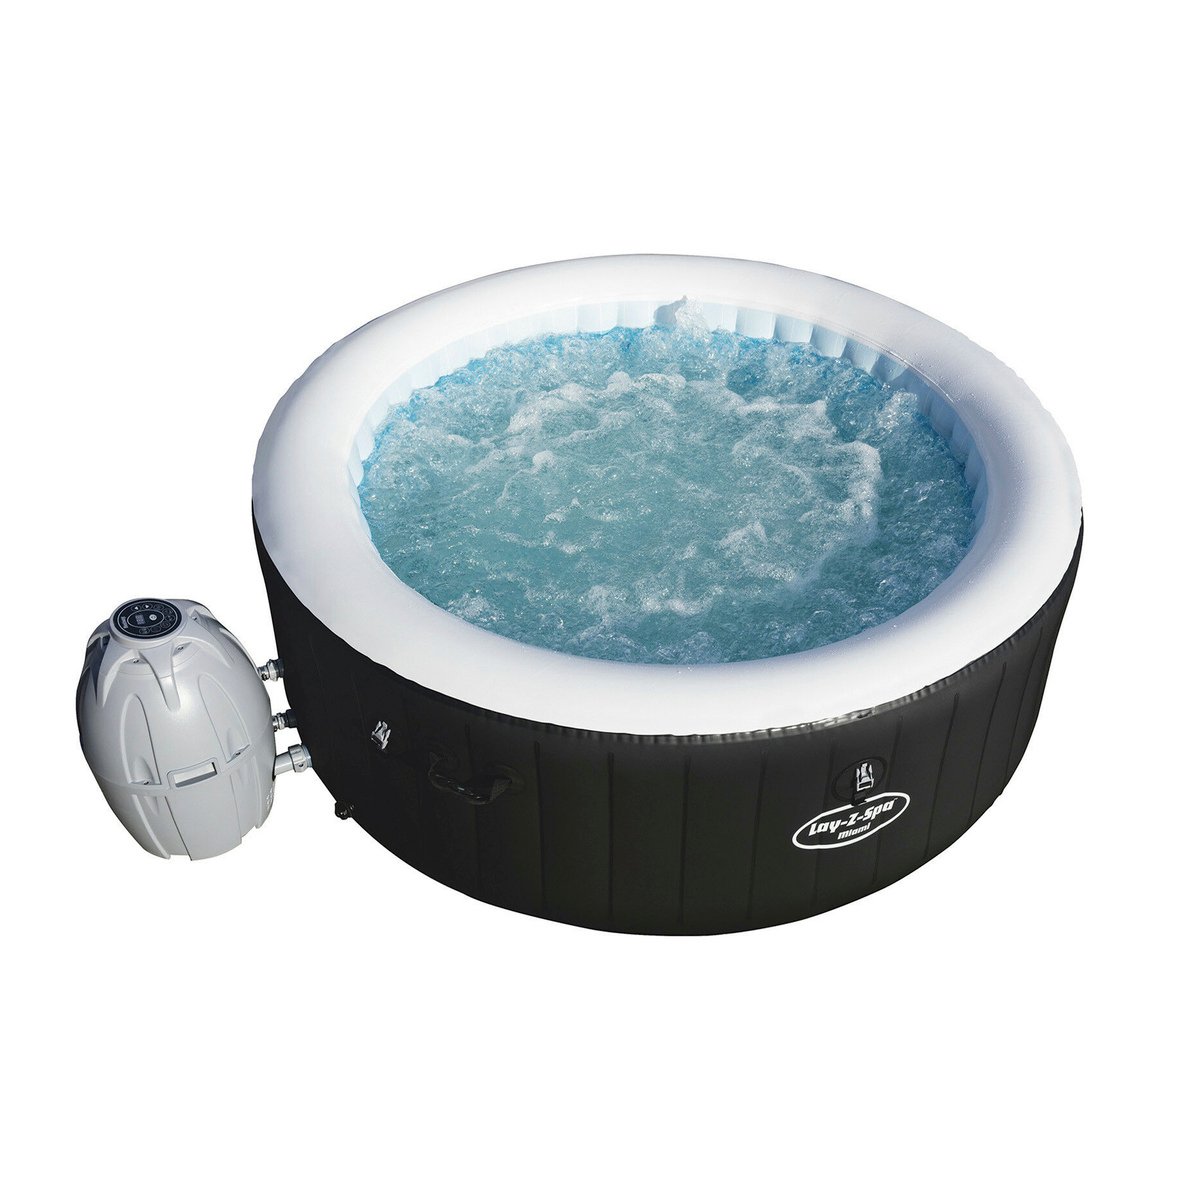 Bestway Lay-Z-Spa Miami Inflatable Hot Tub ,180 x 66 cm, 54123